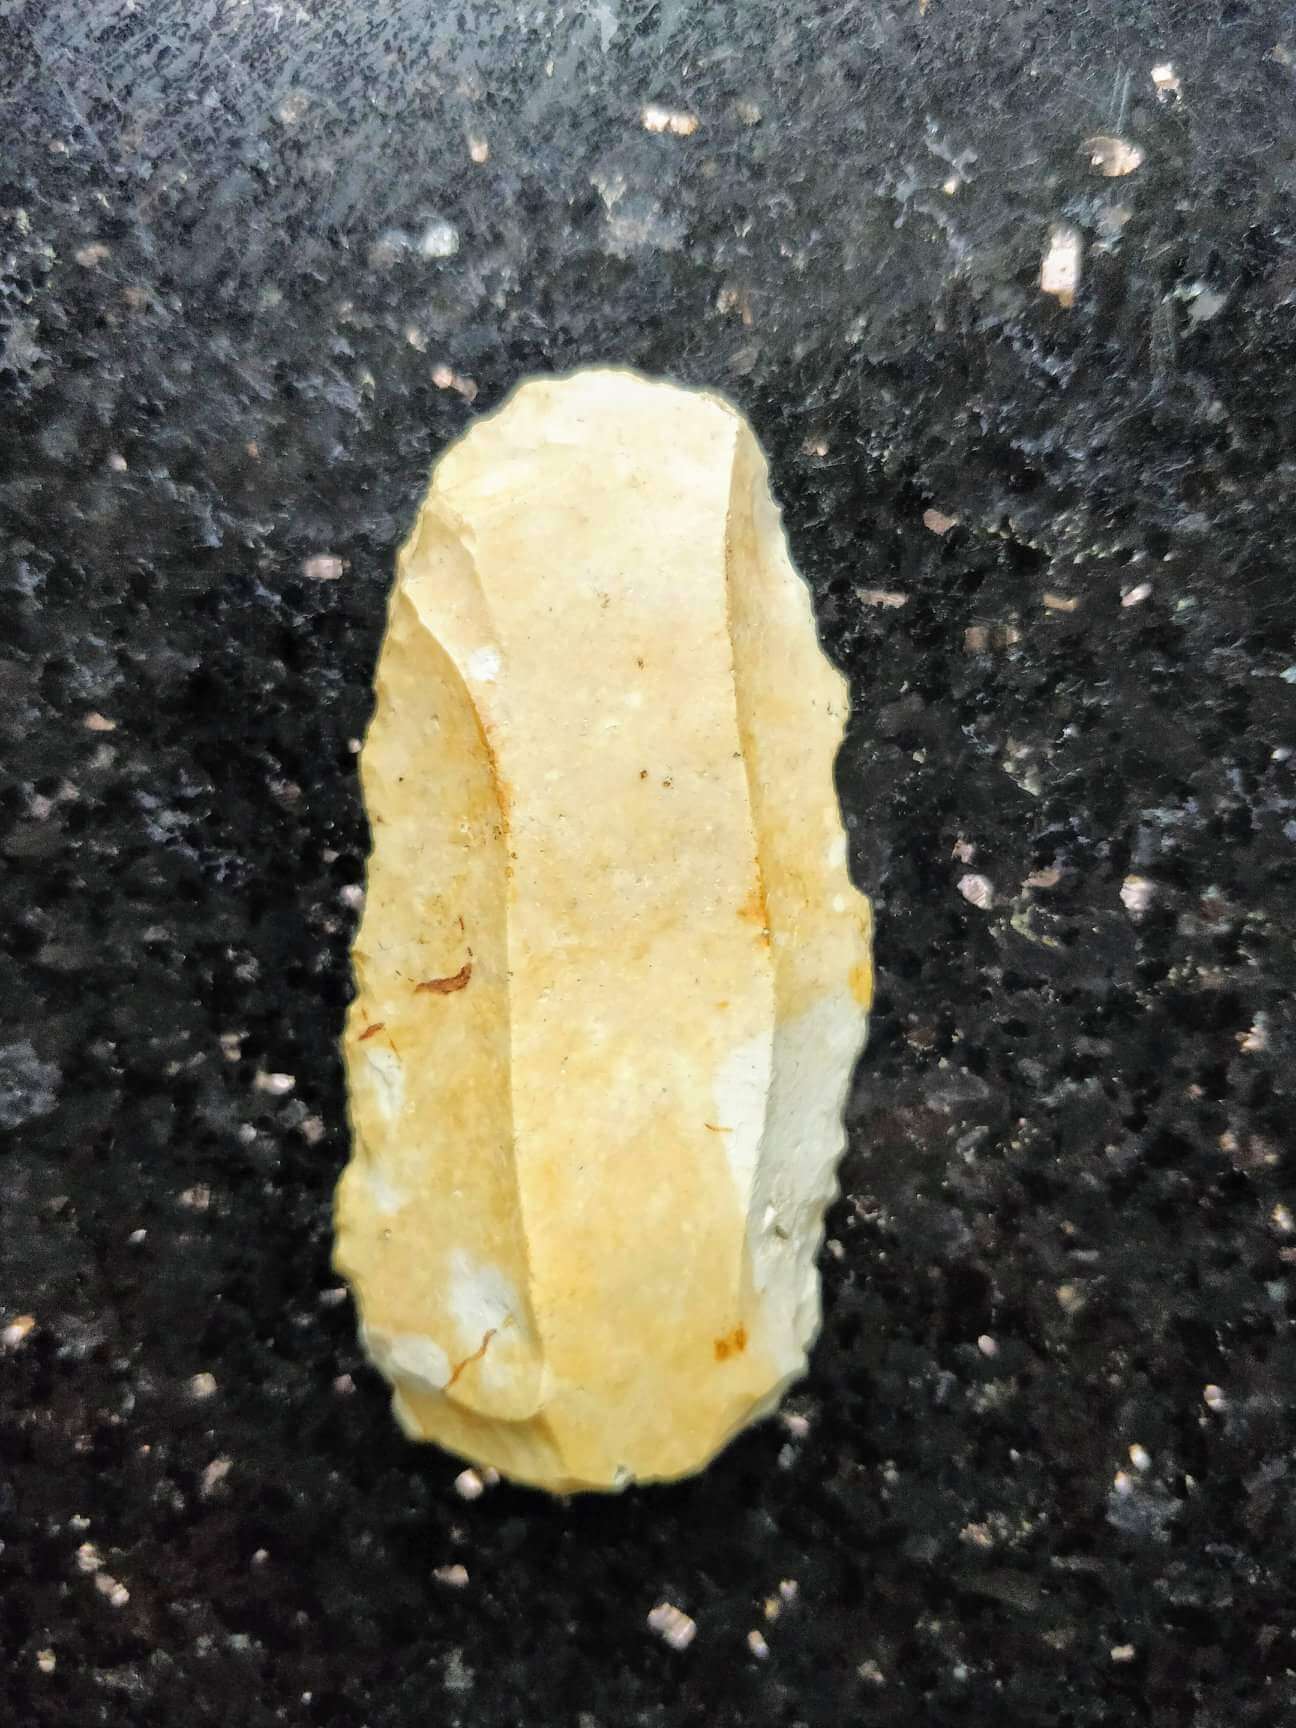 Stone age flint found in Glenshesk, Ballycastle